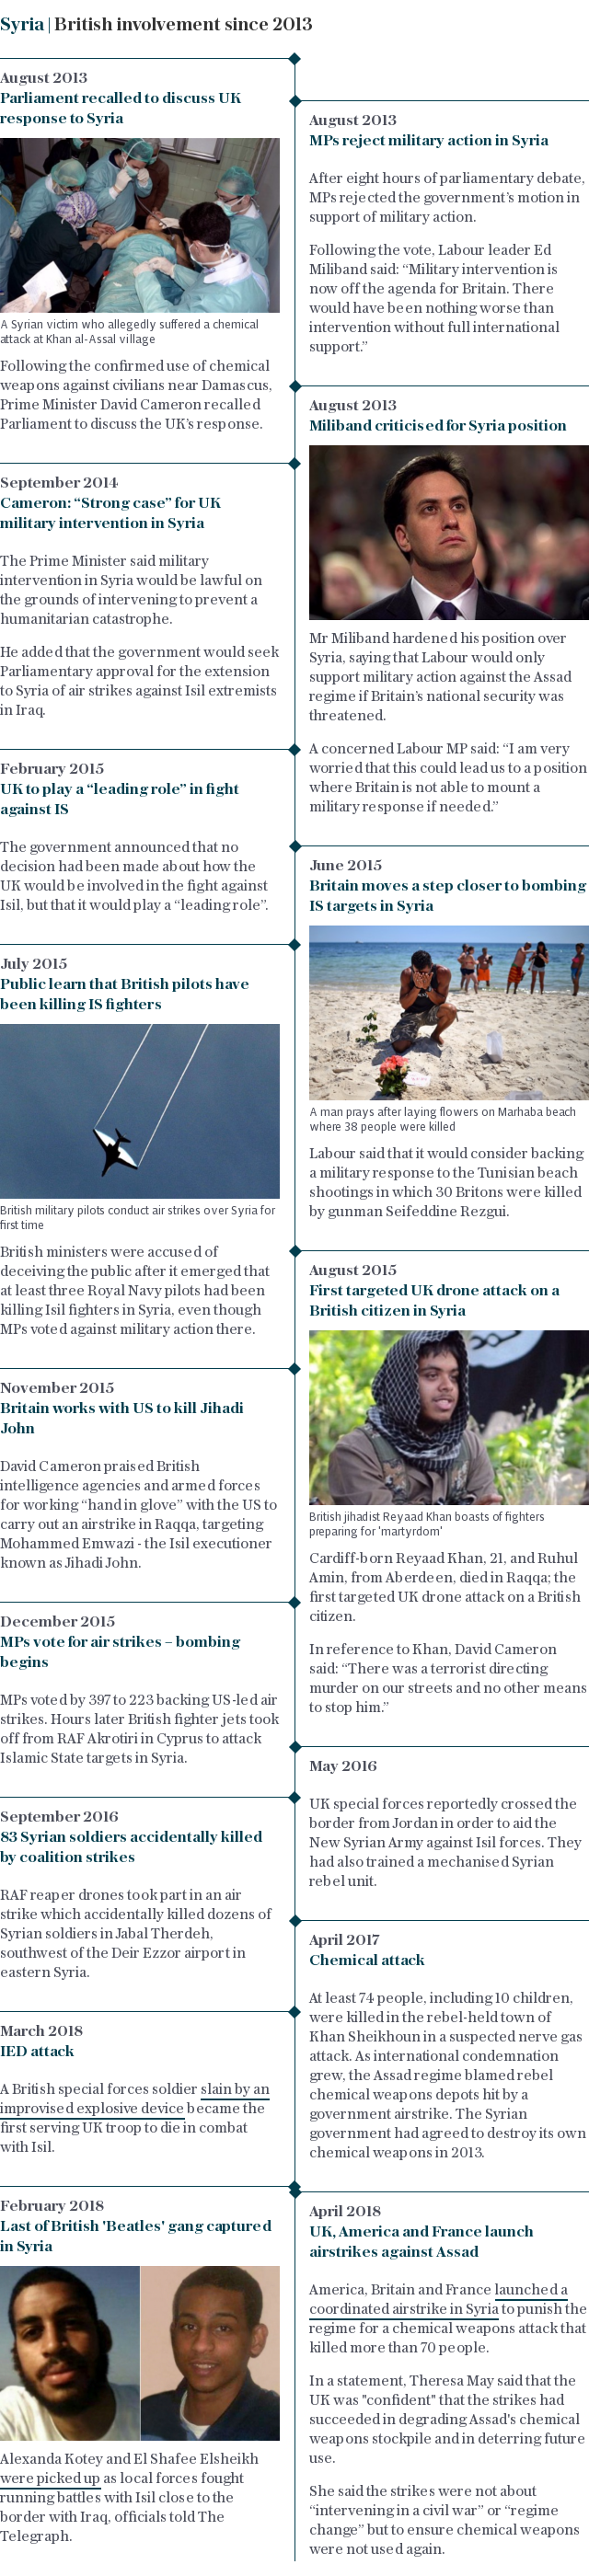 Syria: timeline of British involvement since 2013